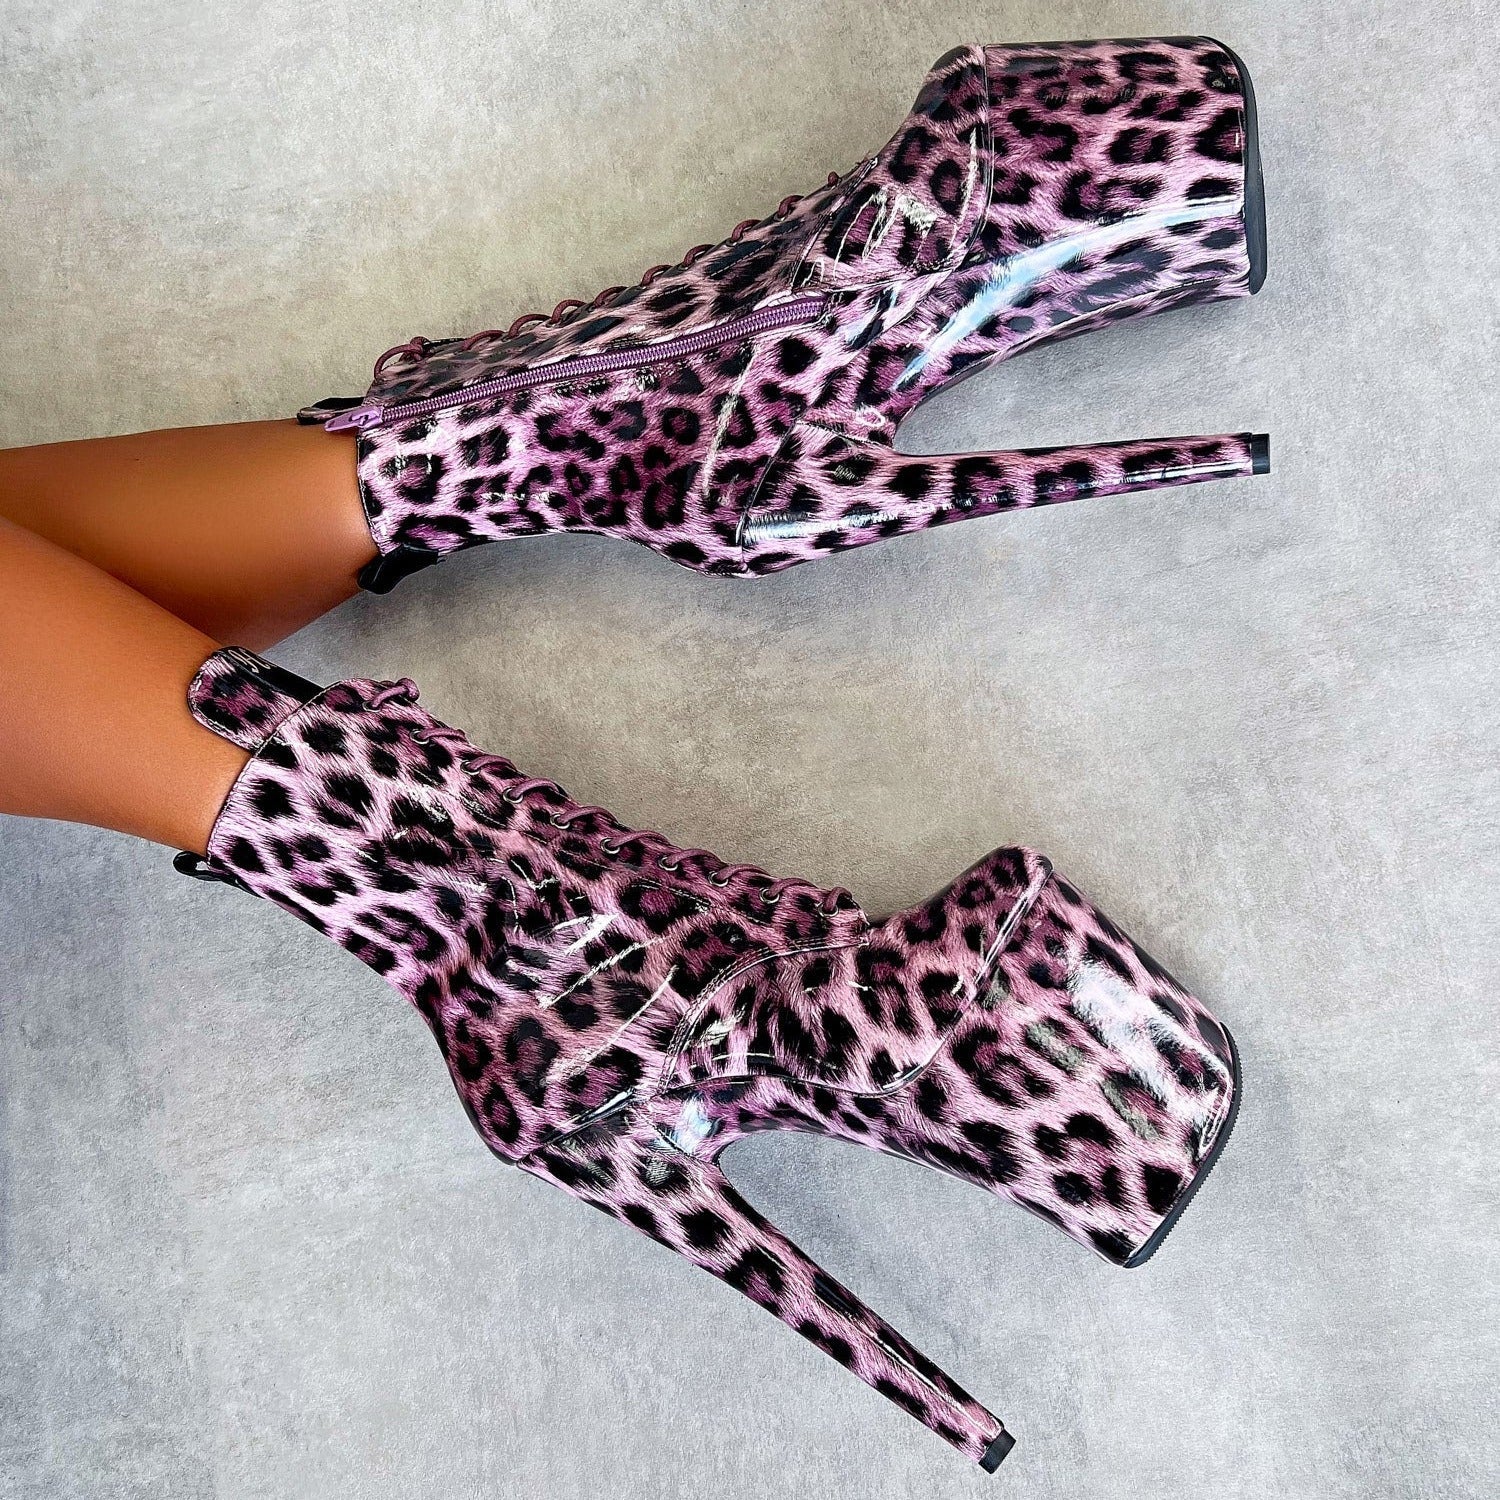 Purple Leopard Boot - 8 INCH, stripper shoe, stripper heel, pole heel, not a pleaser, platform, dancer, pole dance, floor work